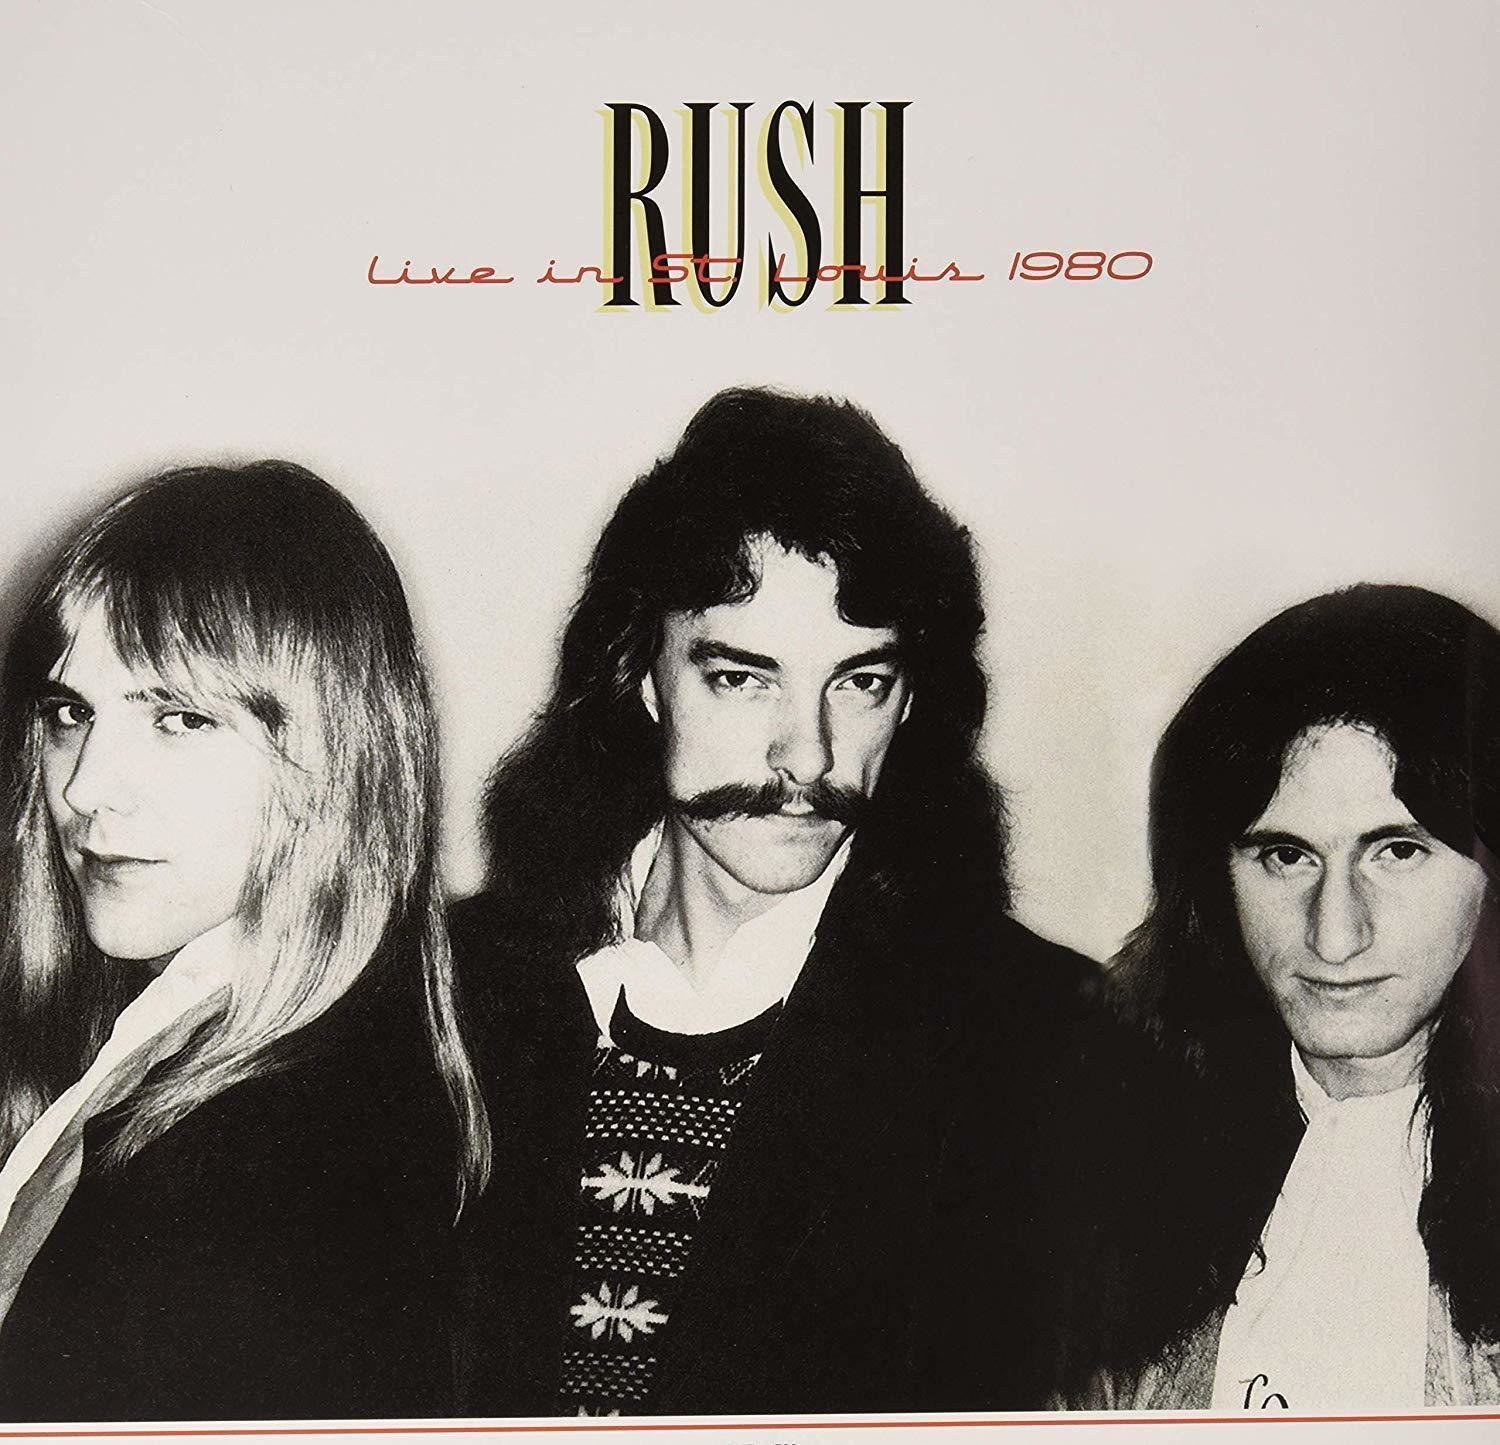 Vinylskiva Rush - Live In St. Louis 1980 (2 LP)